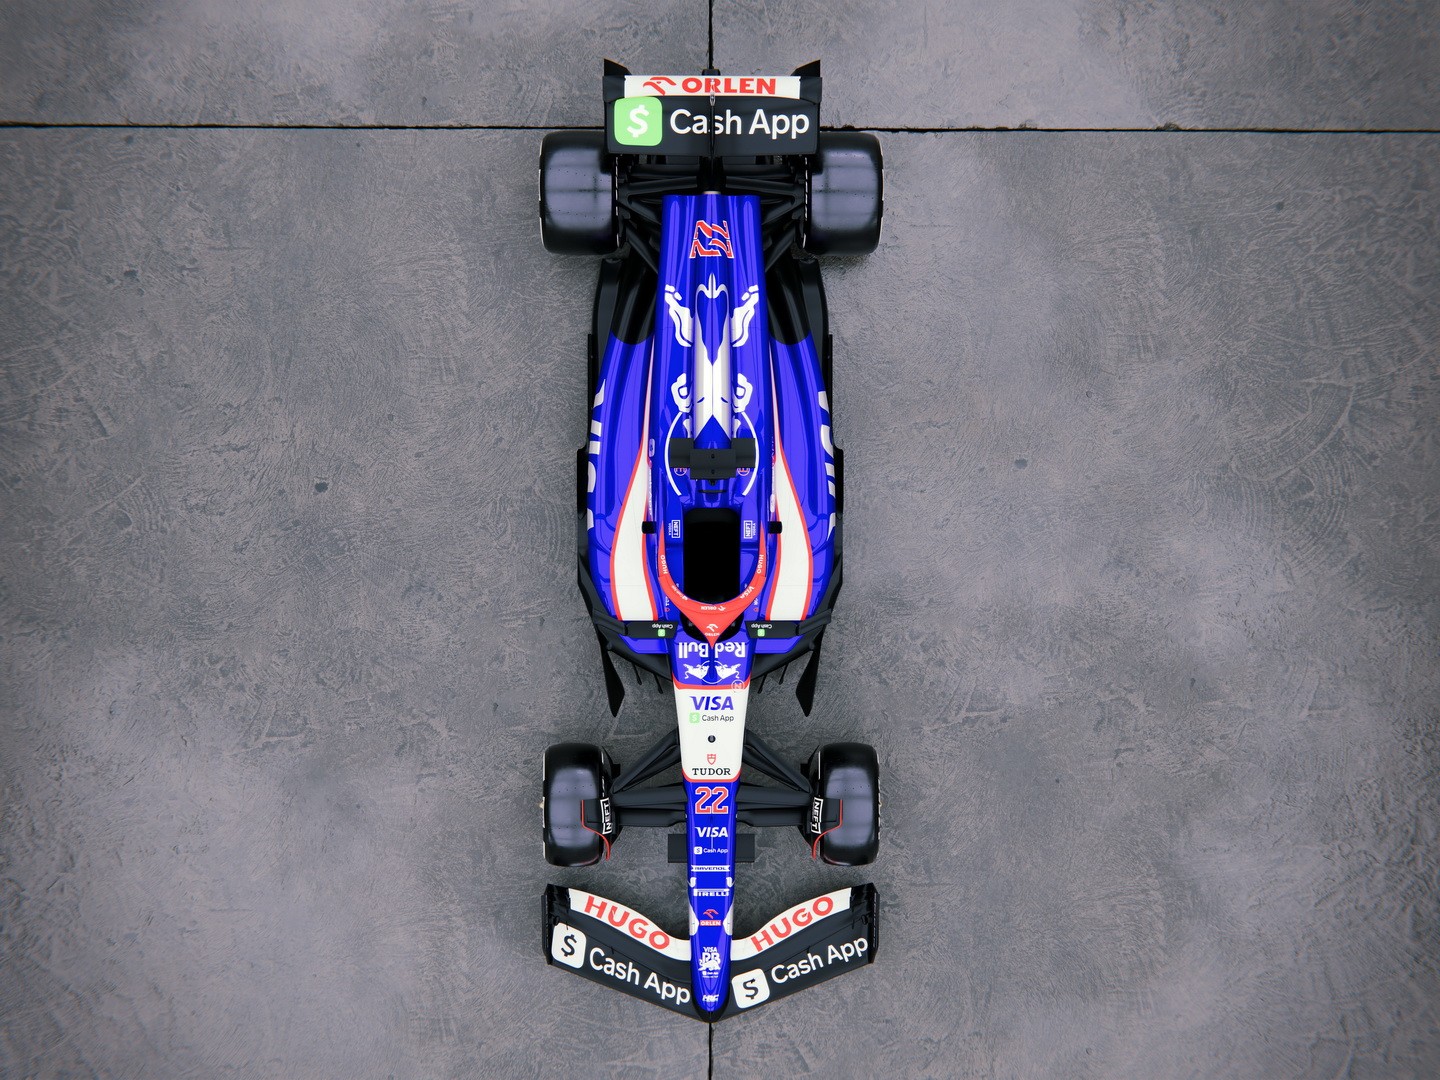 RB представляет болид Формулы-1 VCARB 01, похожий на Williams Renault 1997 года Жака Вильнёва